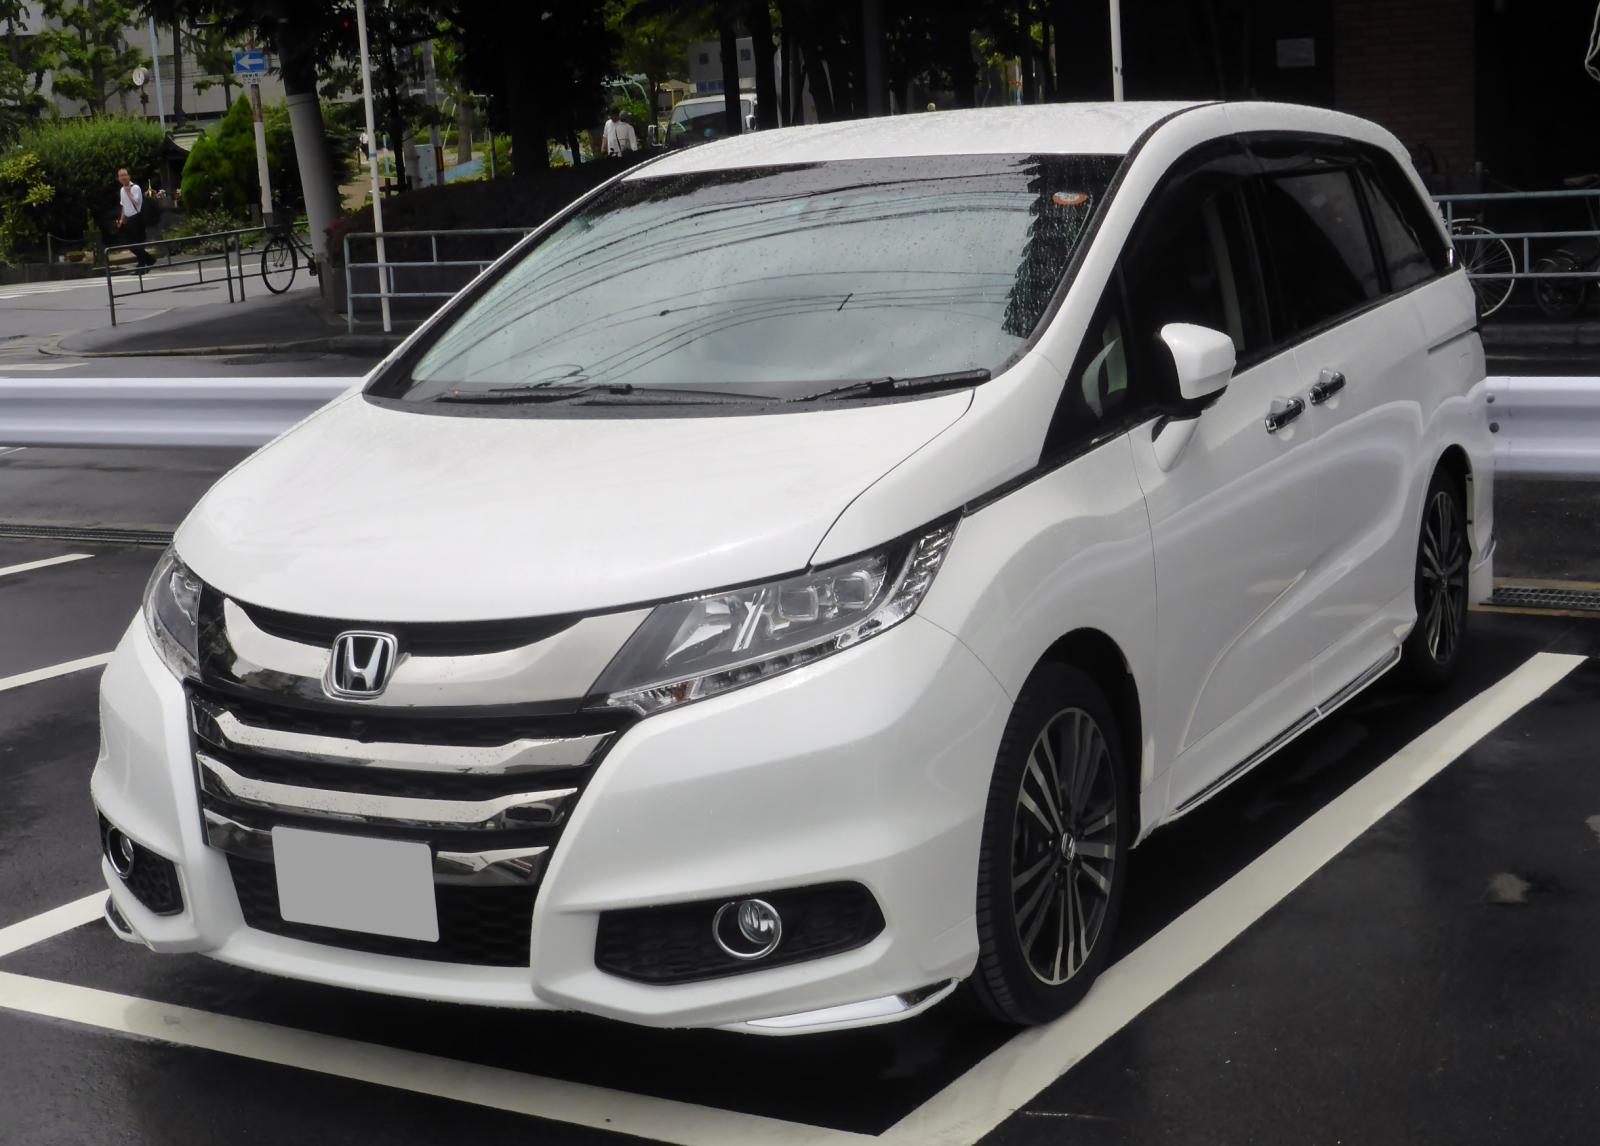 Honda Odyssey 2022 price Philippines